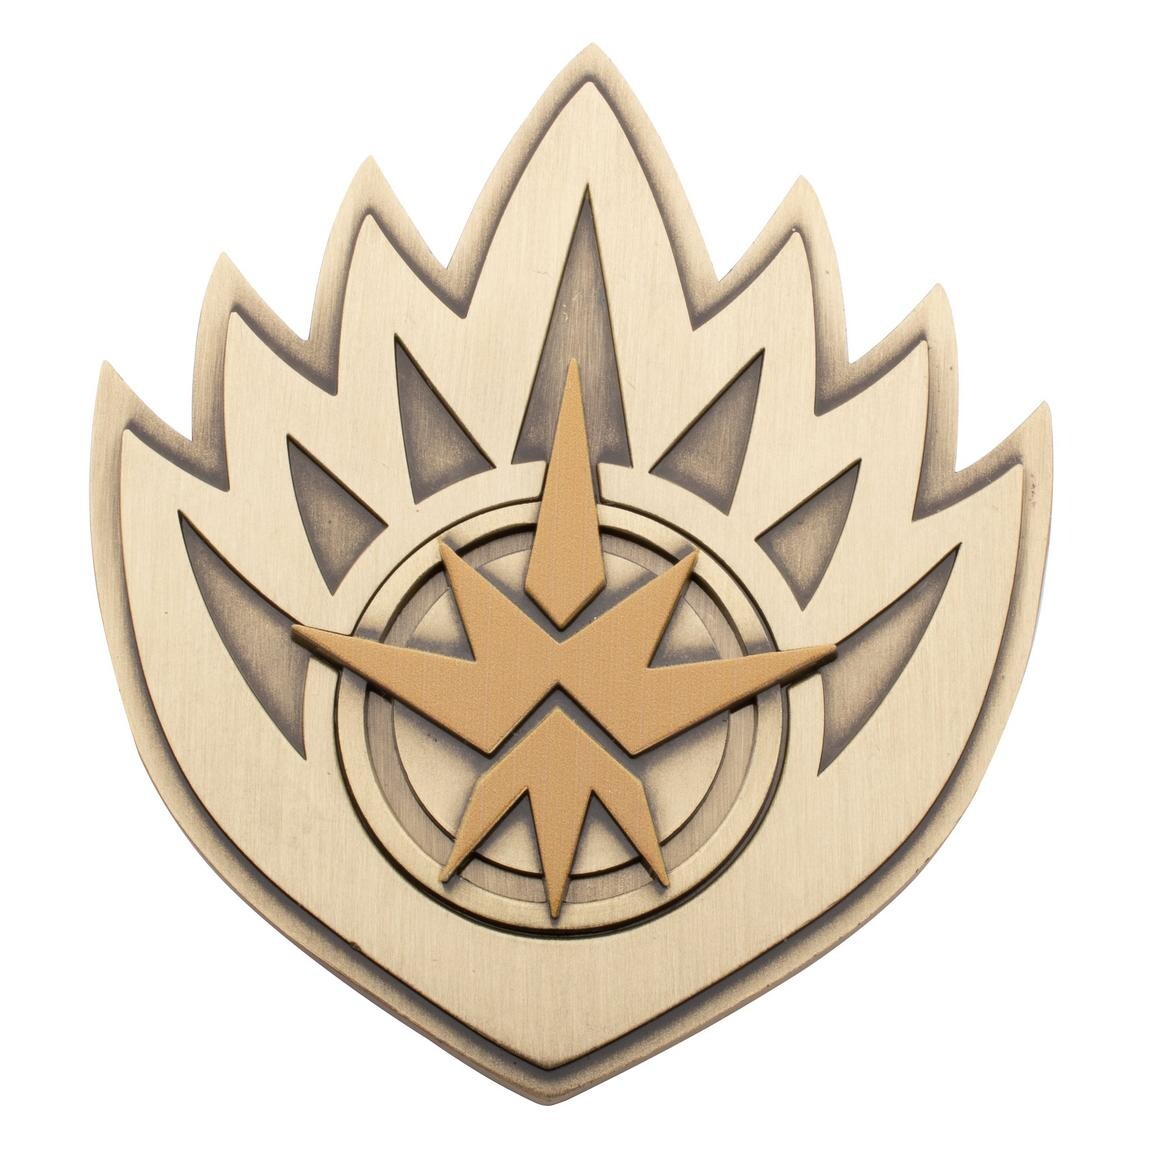 Galaxy Rangers Emblem by SagittariusArtworks - Thingiverse